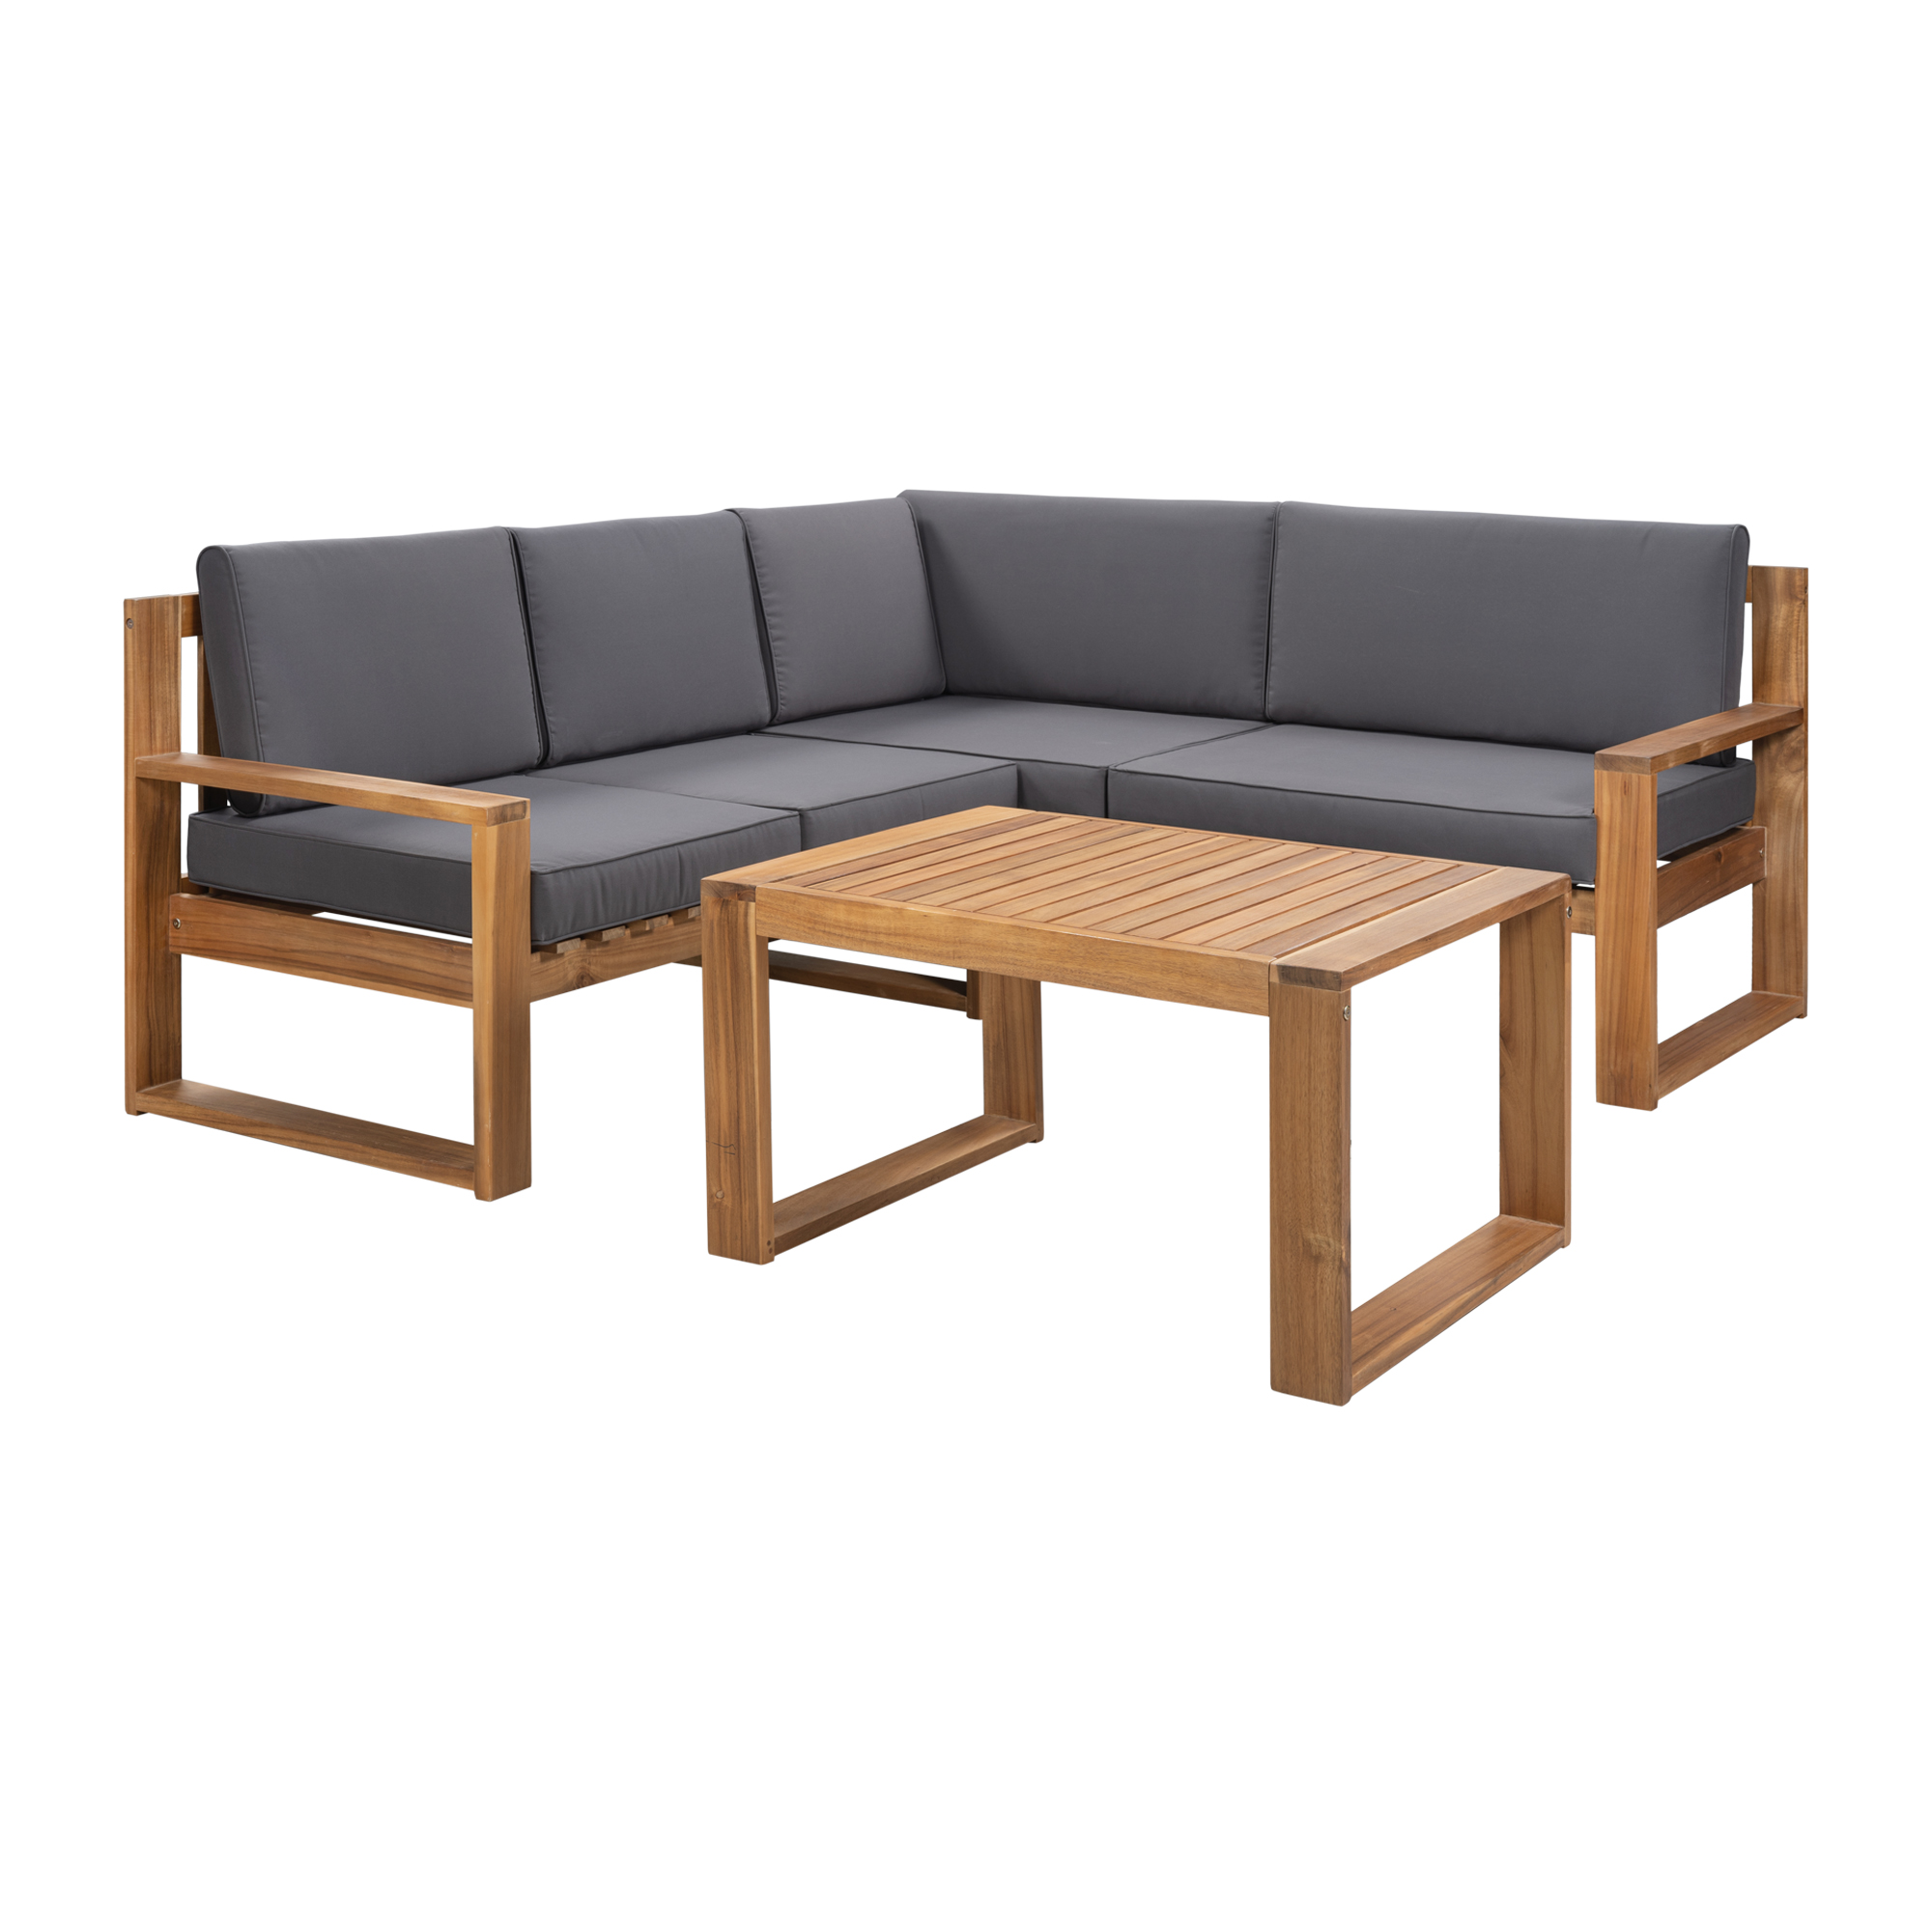 Casainc  3-Piece Patio Sectional Set Acacia Wood and Grey Cushions Ideal for Outdoors and Indoors-CASAINC